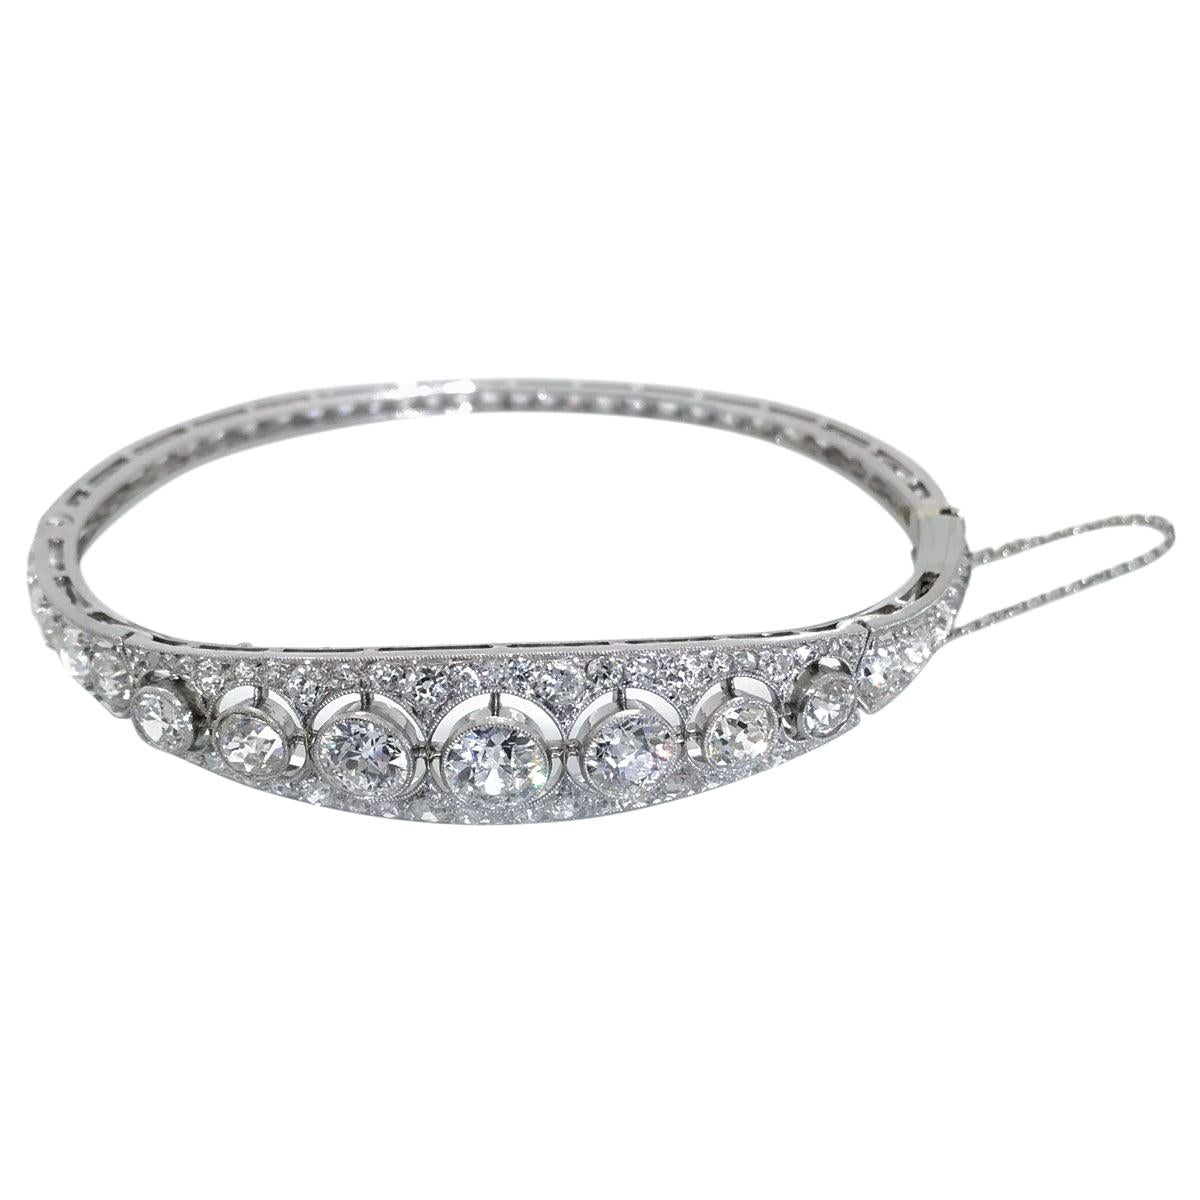 Art Deco French Platinum 9.80 Carat Diamond Bangle Bracelet